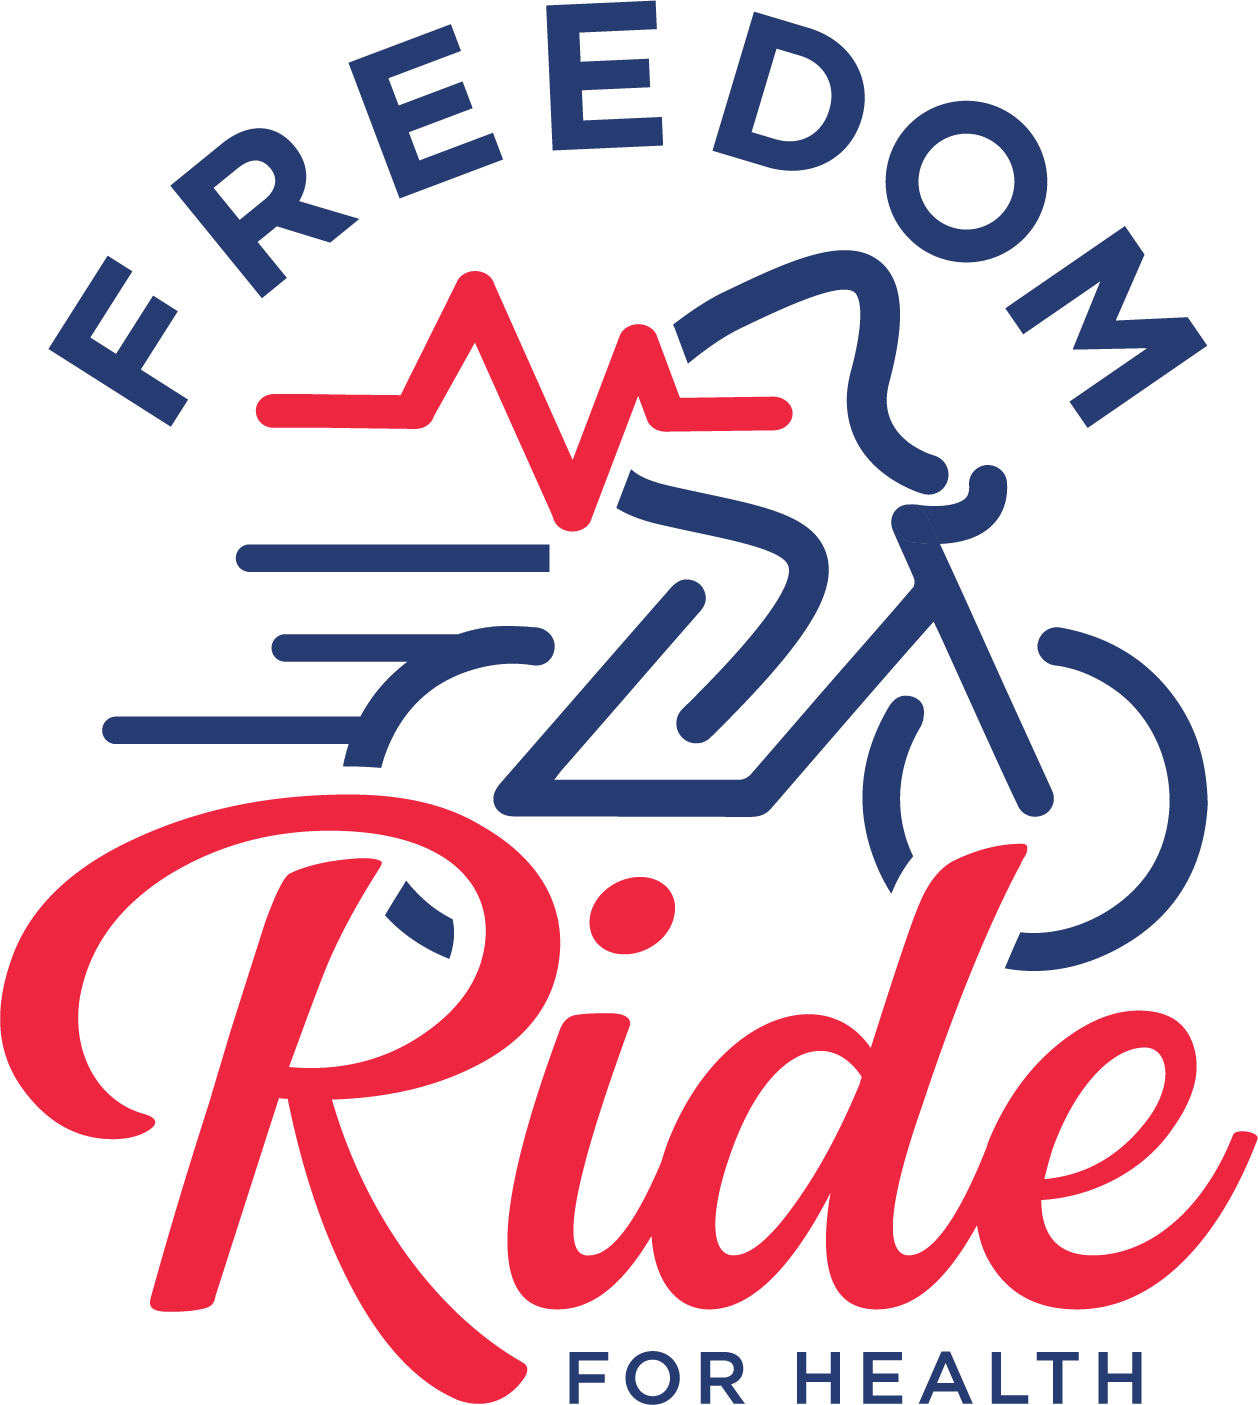 FreedomRide-logo no date.jpg